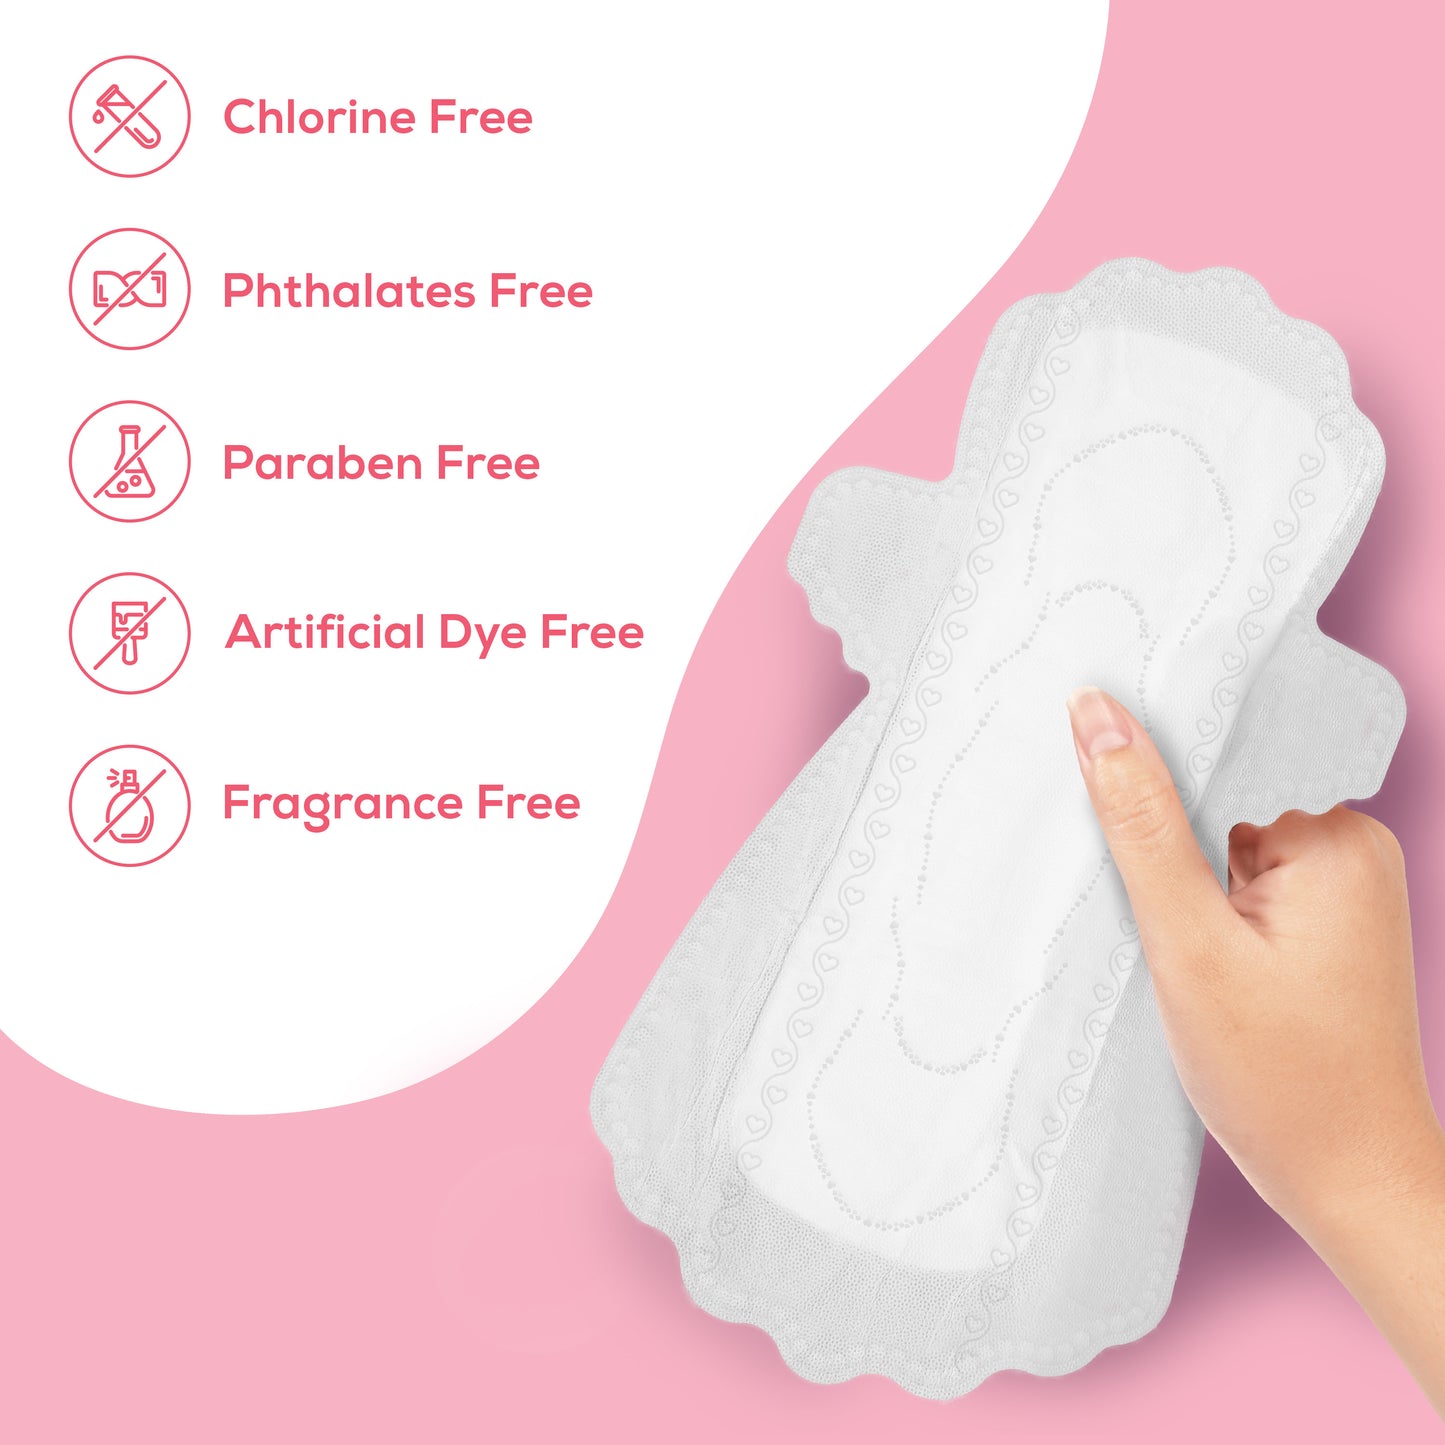 Evereve Ultra Thin Rash Free Cotton Sanitary Pads, XL, 12's Pack